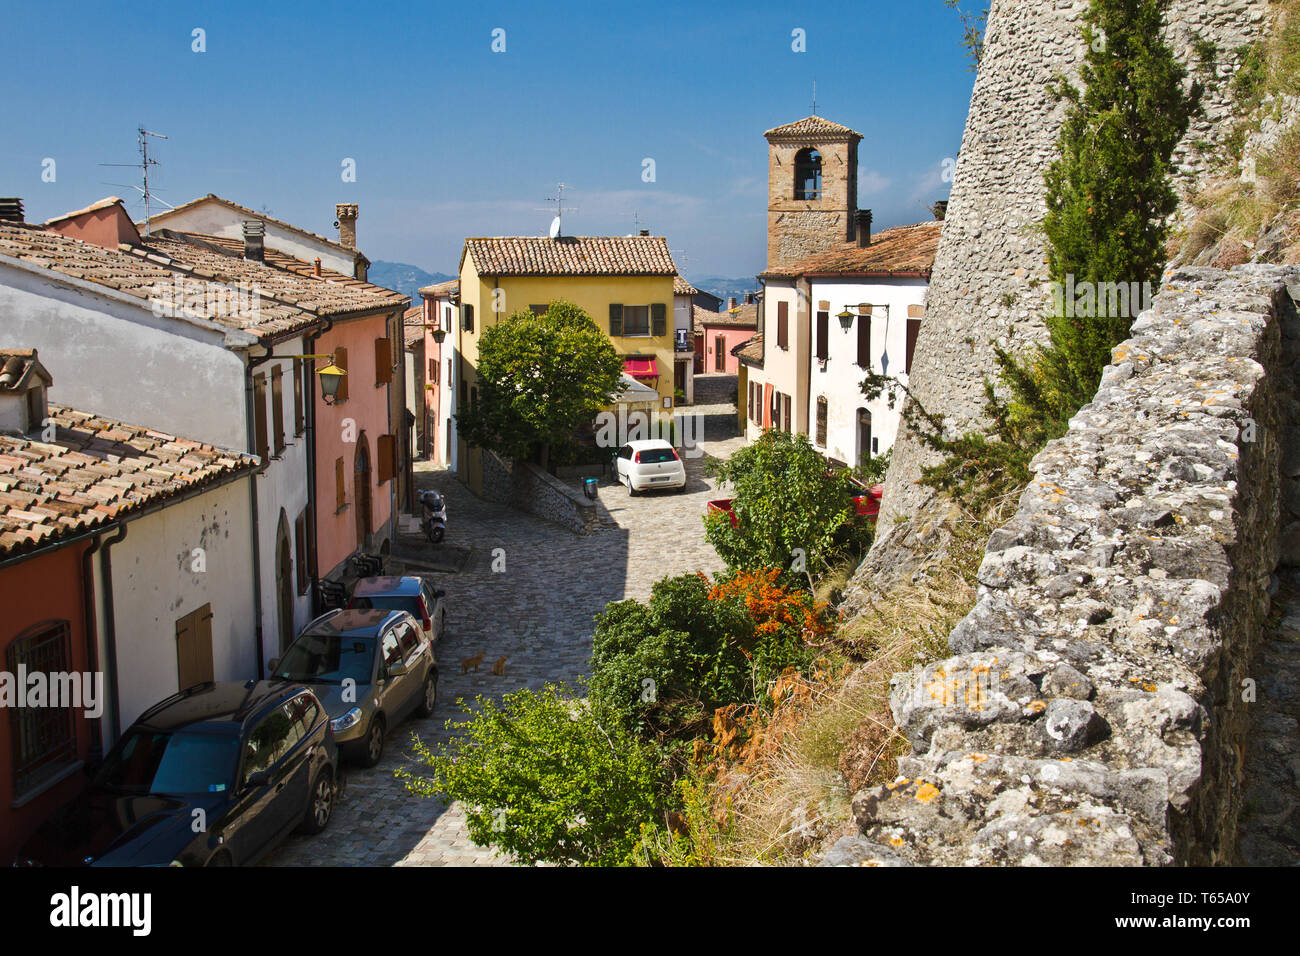 Small Village Montebello, Italy Stock Photo - Alamy